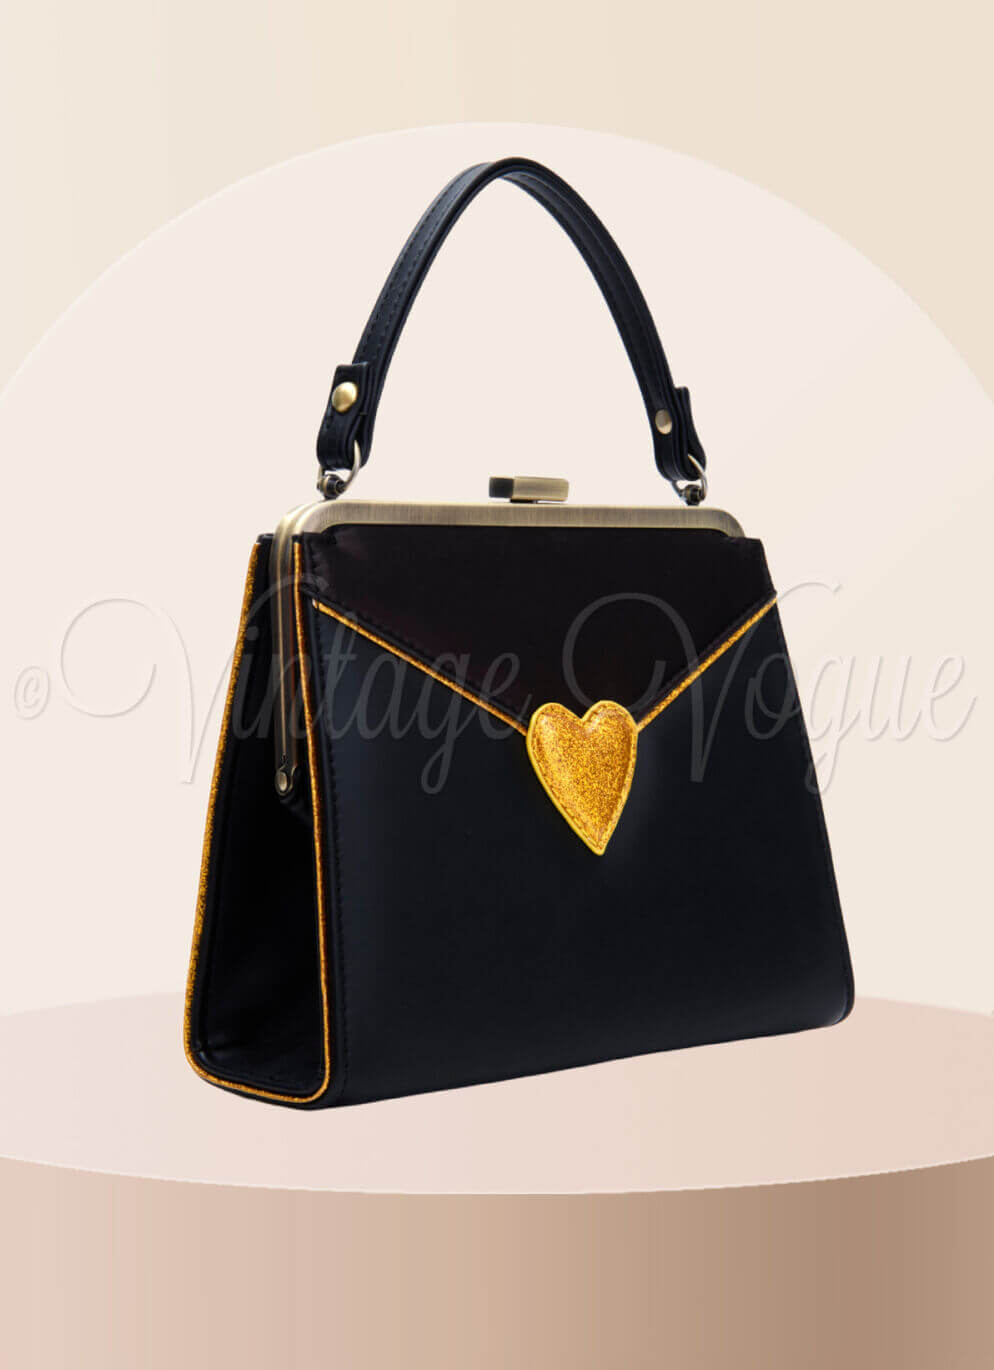 Lola Ramona 60's Retro Herzen Handtasche Tasche “Inez Heart” in Schwarz Gold